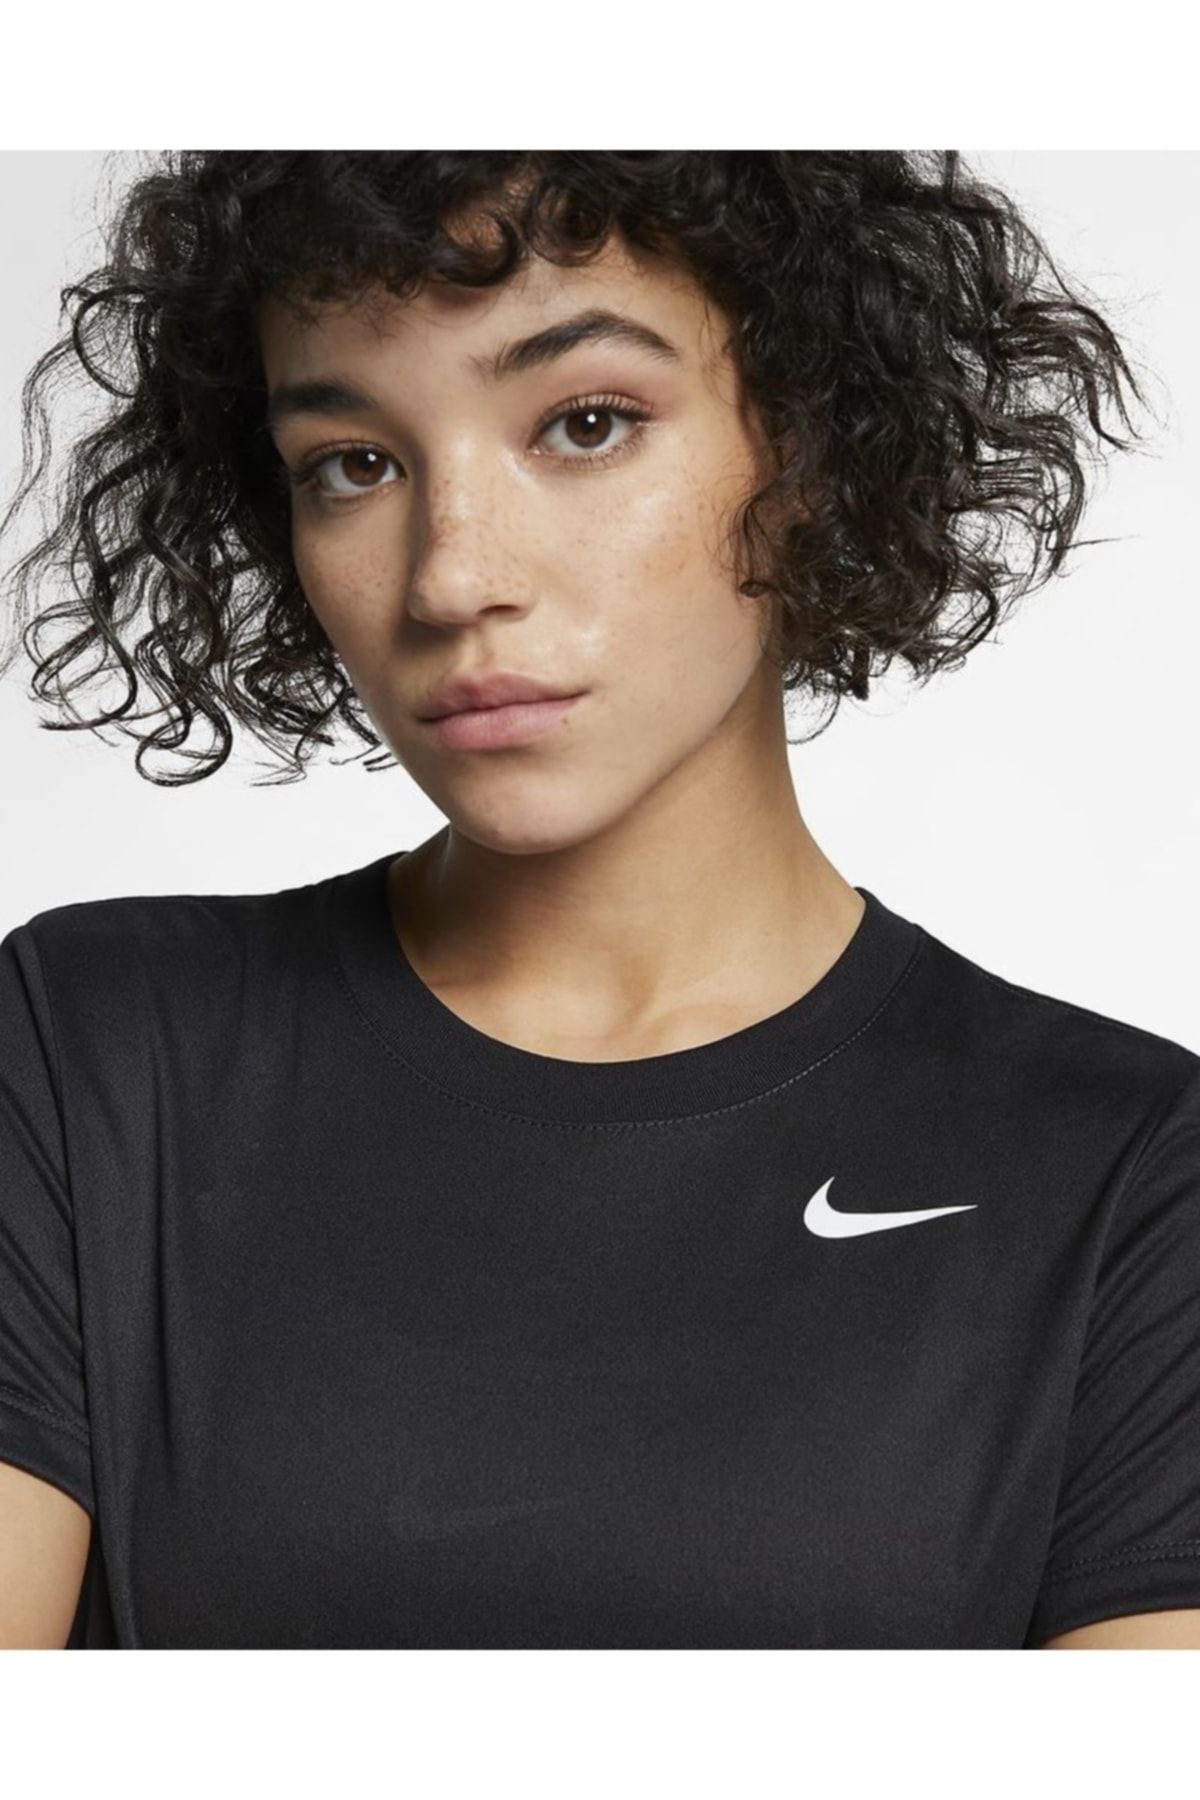 Nike Dry Layer Ss Top Kadın Siyah Antrenman Tişört CJ9326-010